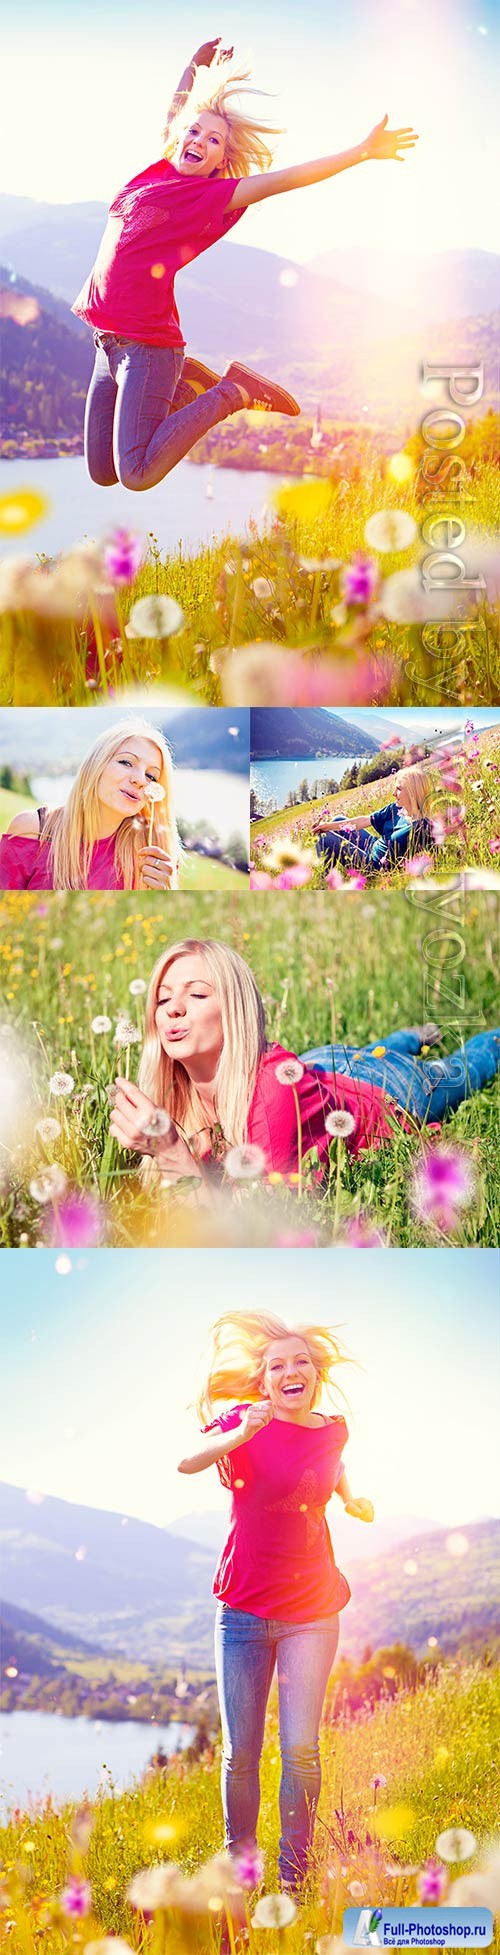 Cheerful girl with dandelions stock photo